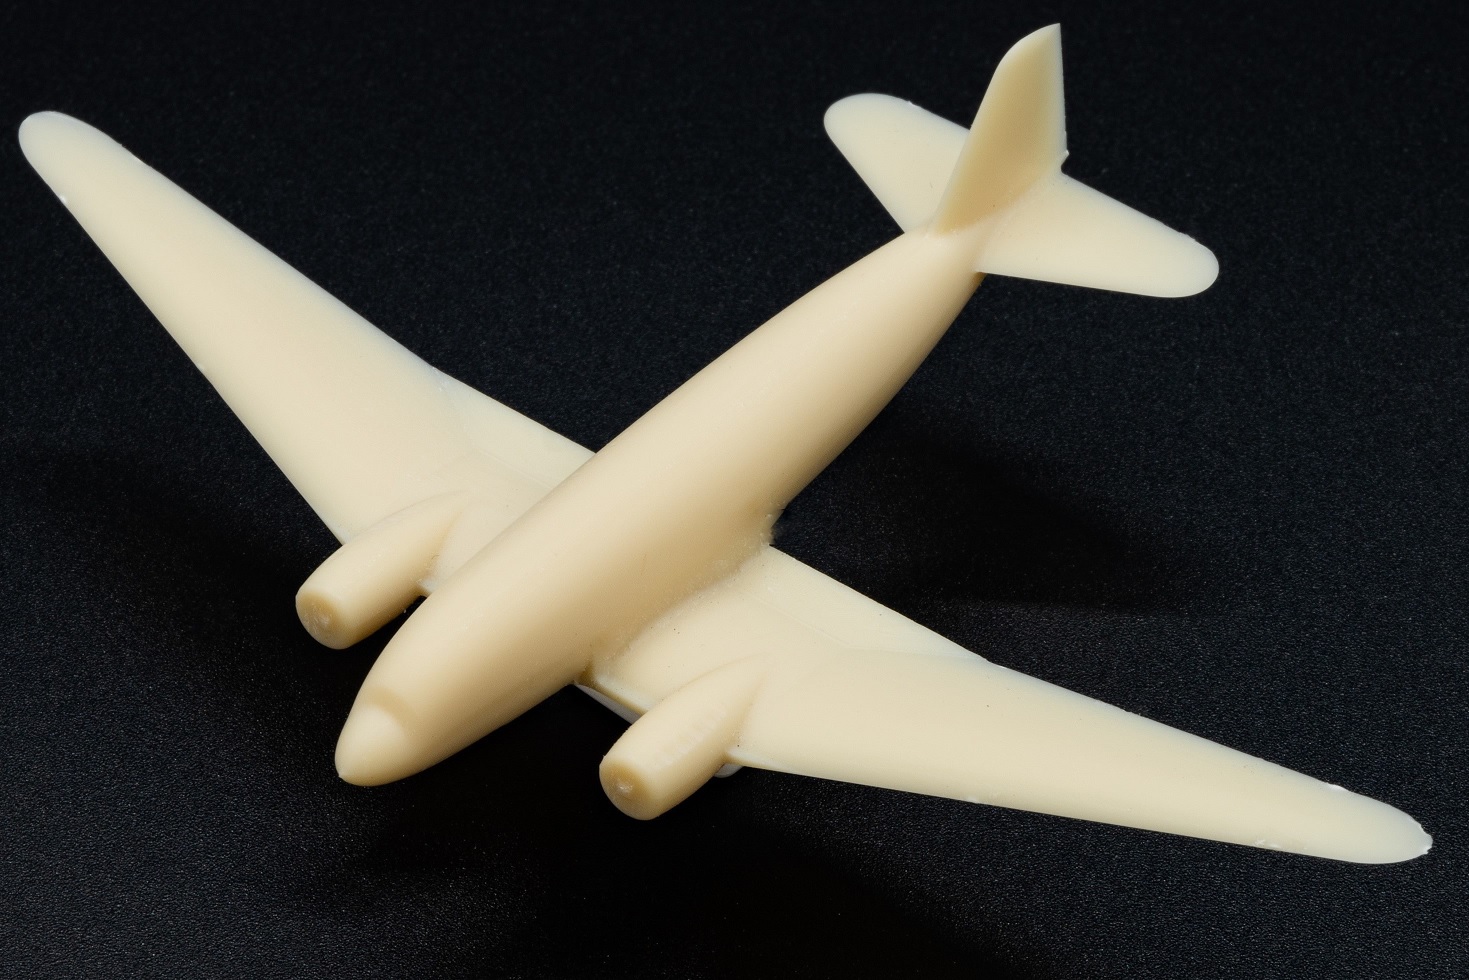 Labonosが出力した飛行機のモデルです。